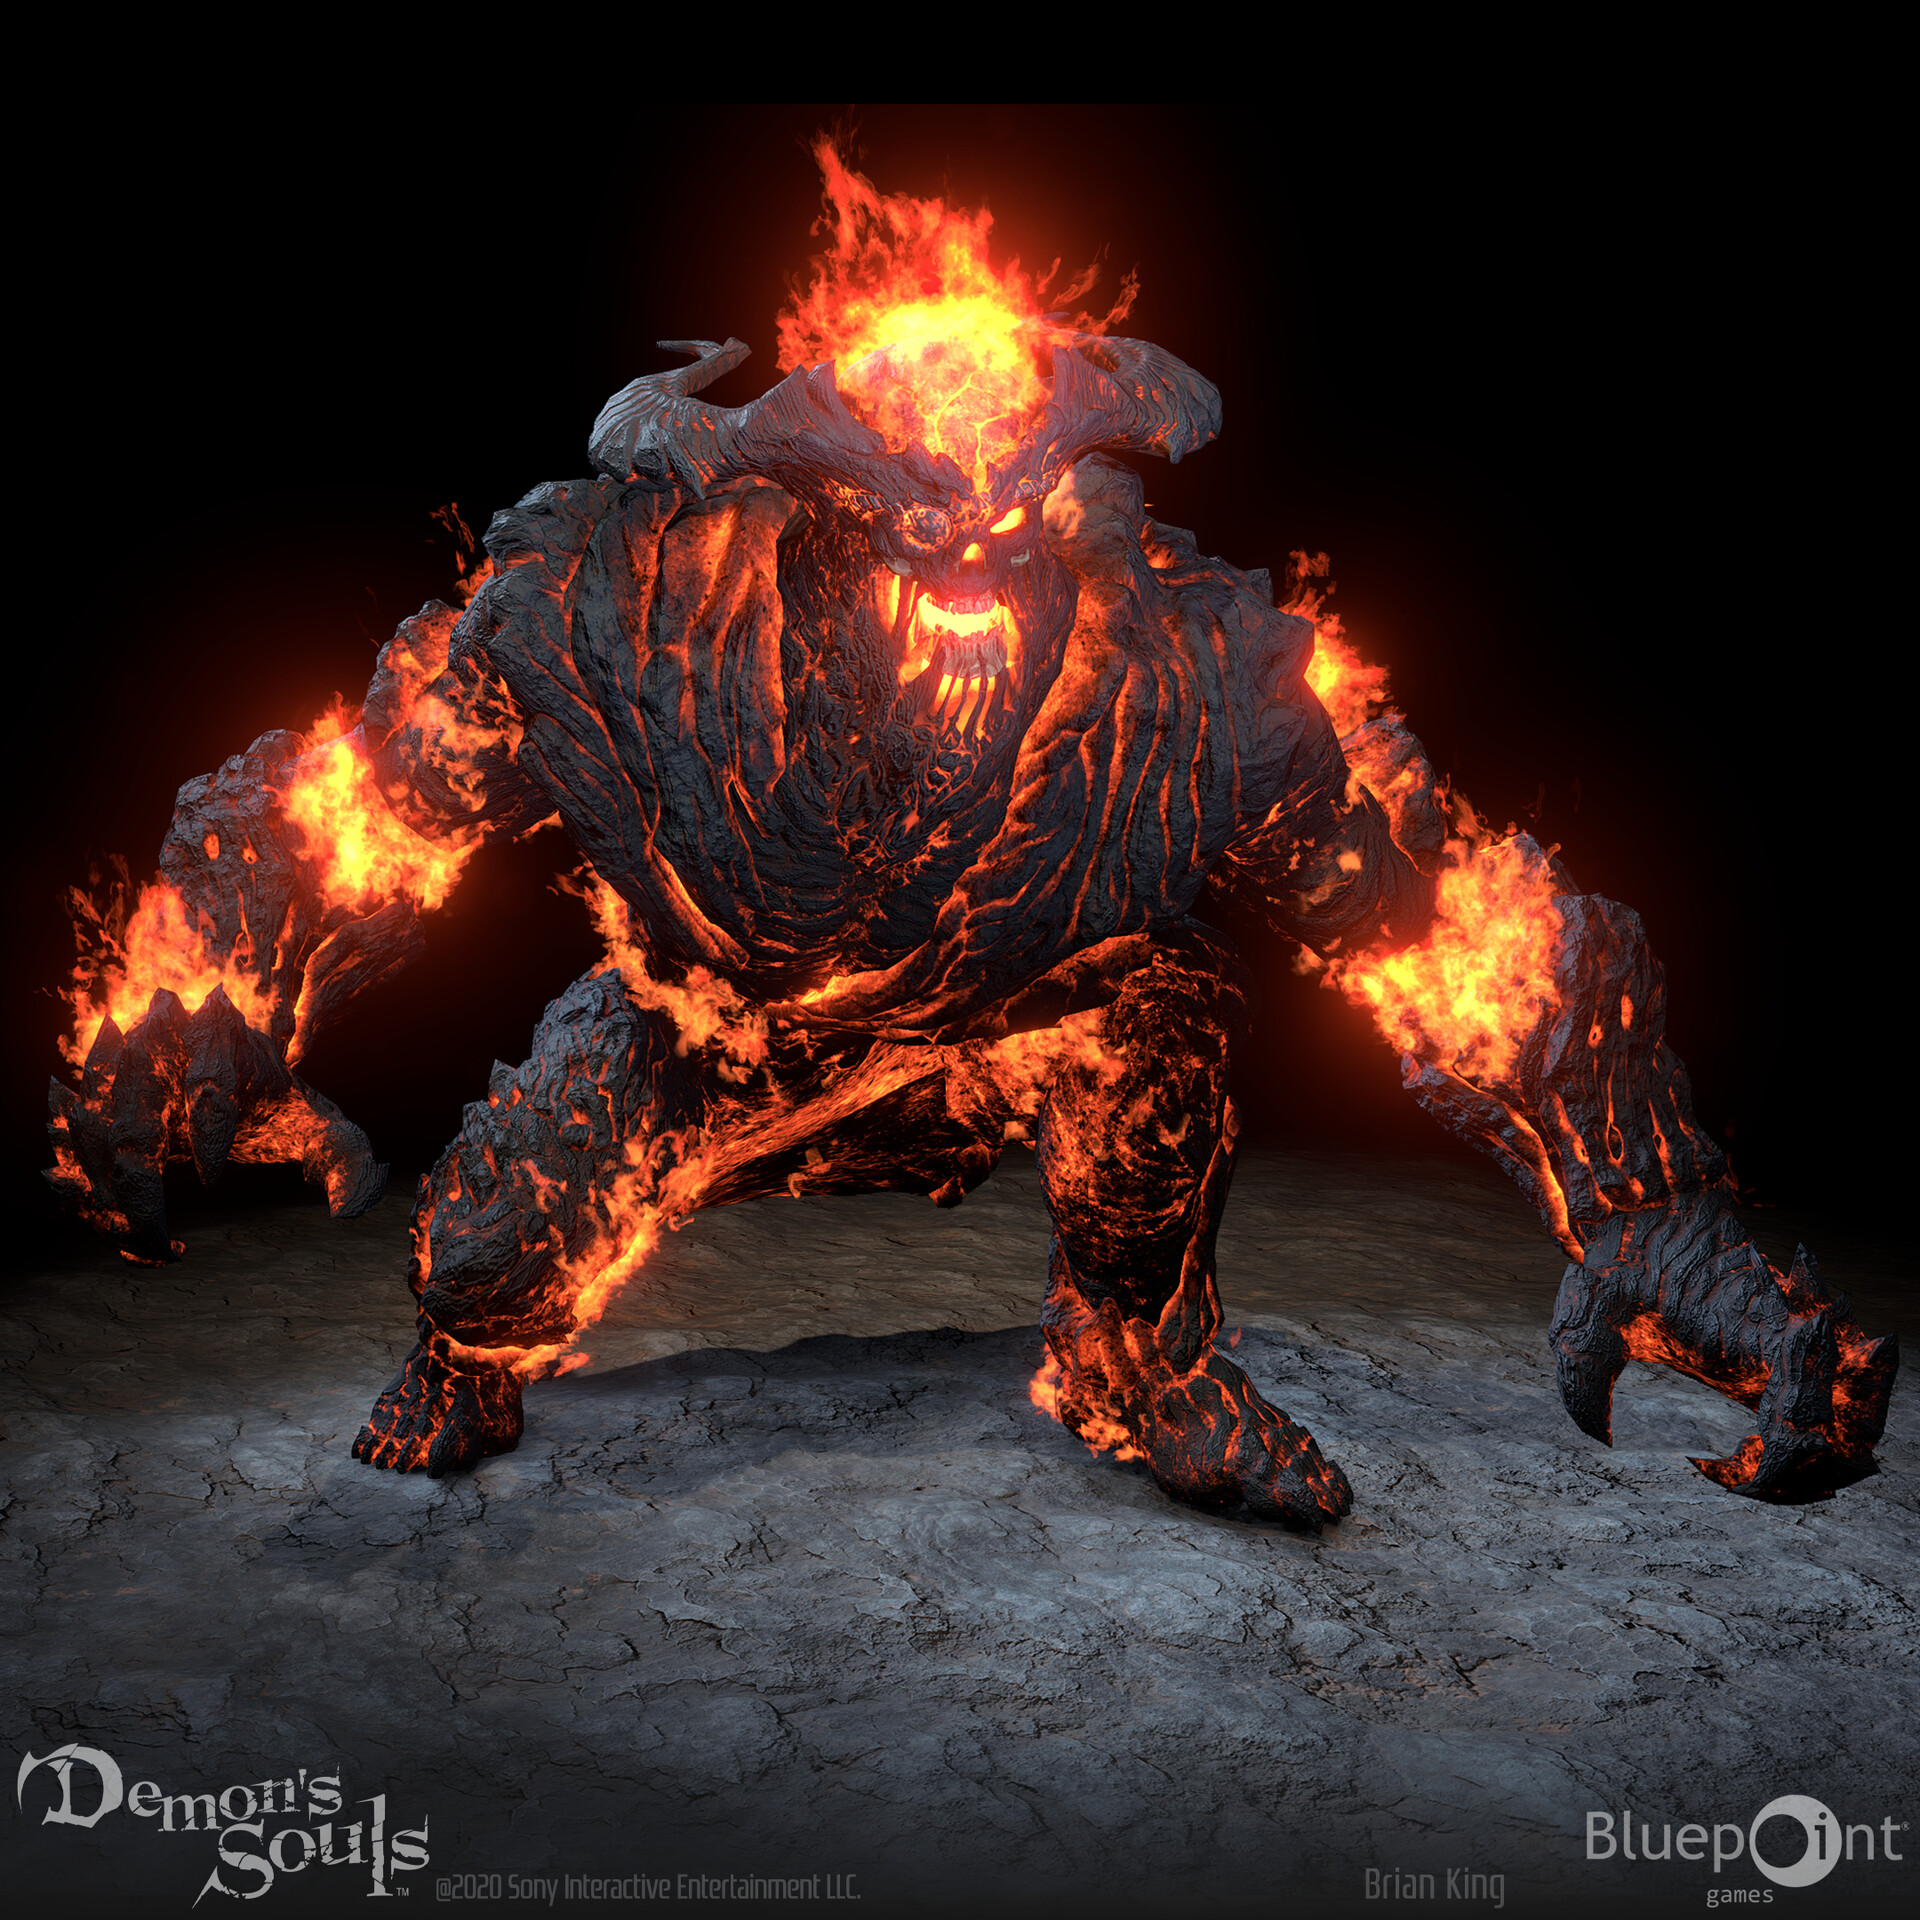 Flamelurker - Demon's Souls.com